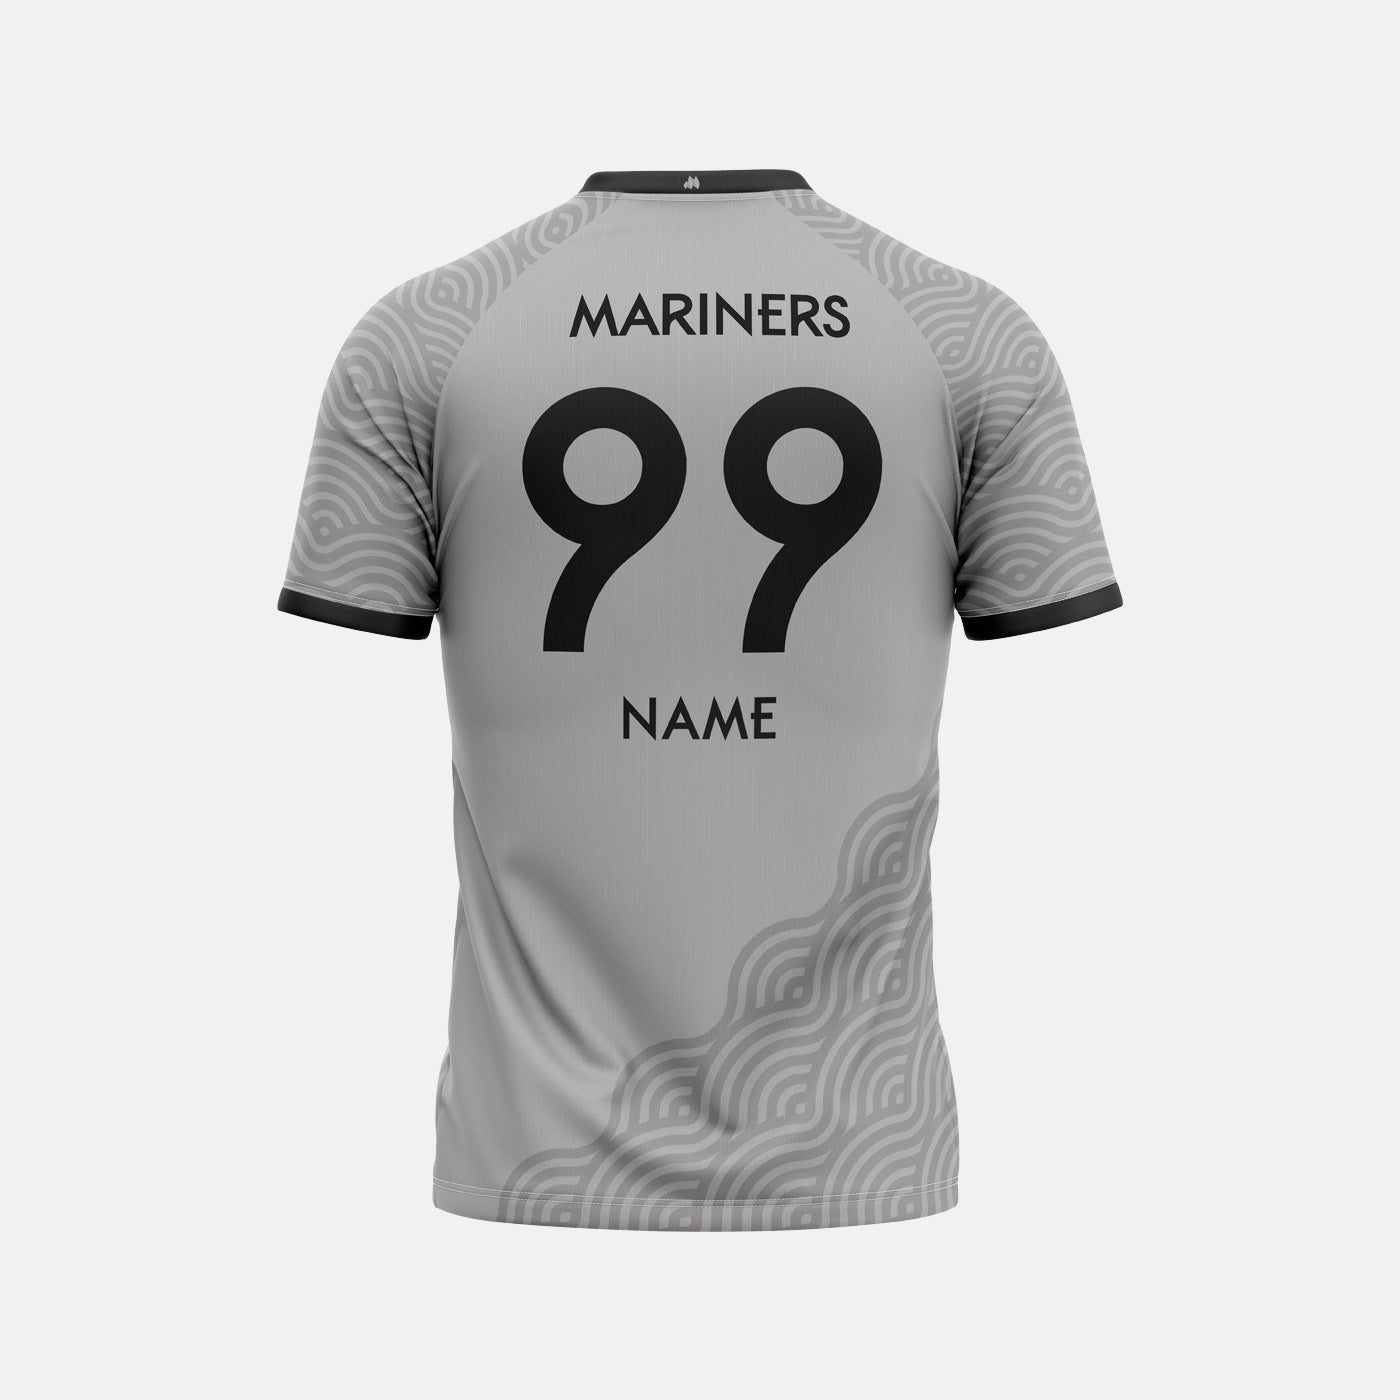 Mariners FC Grey Jersey